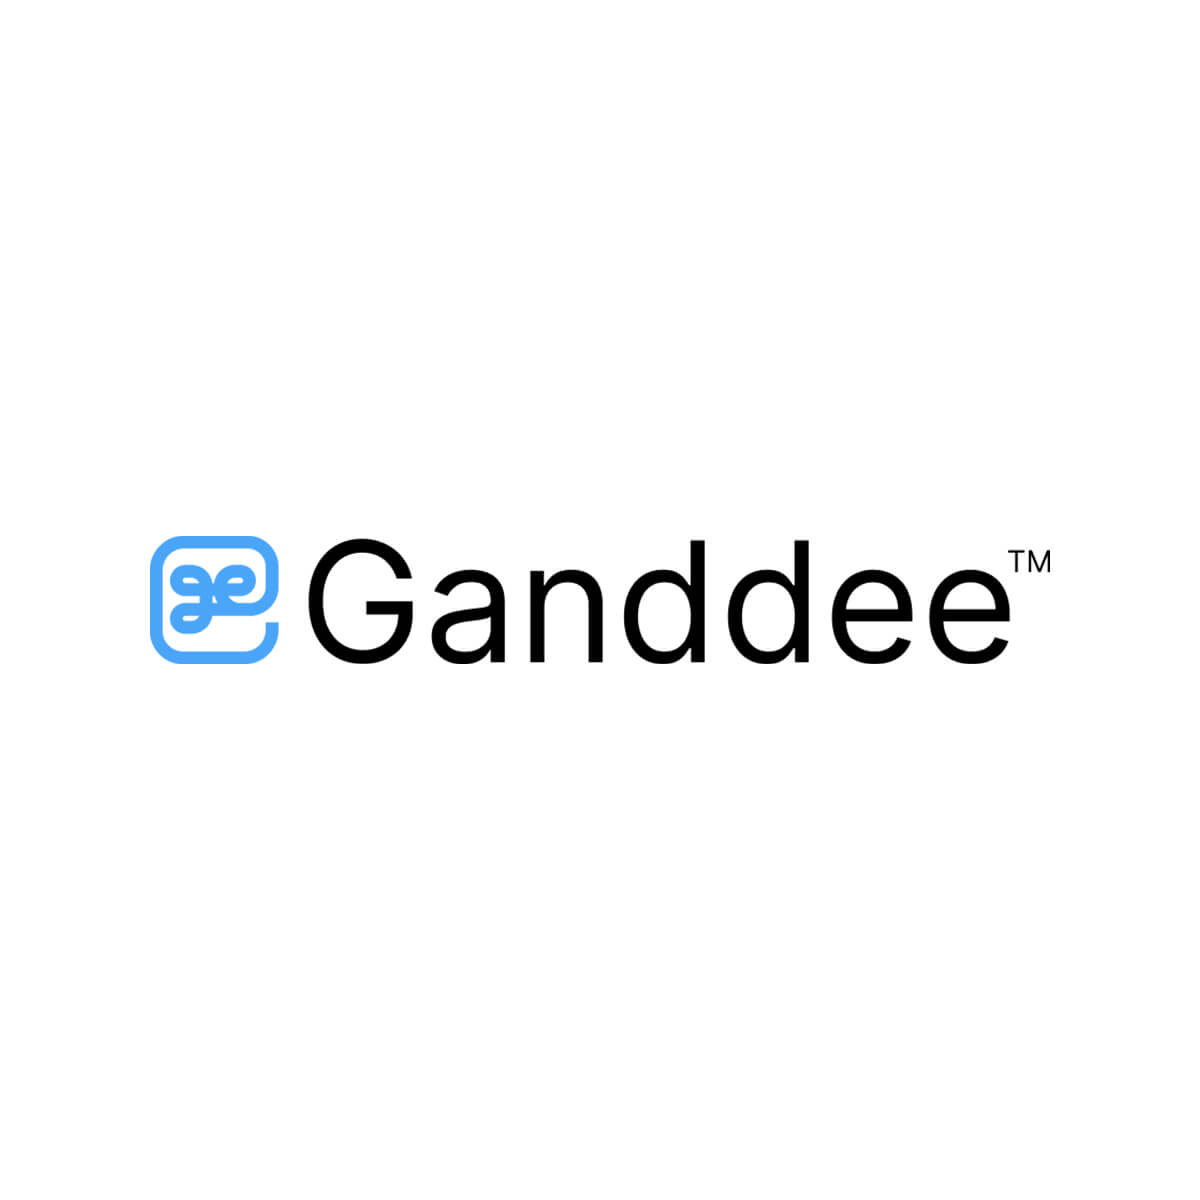 Ganddee-Logo